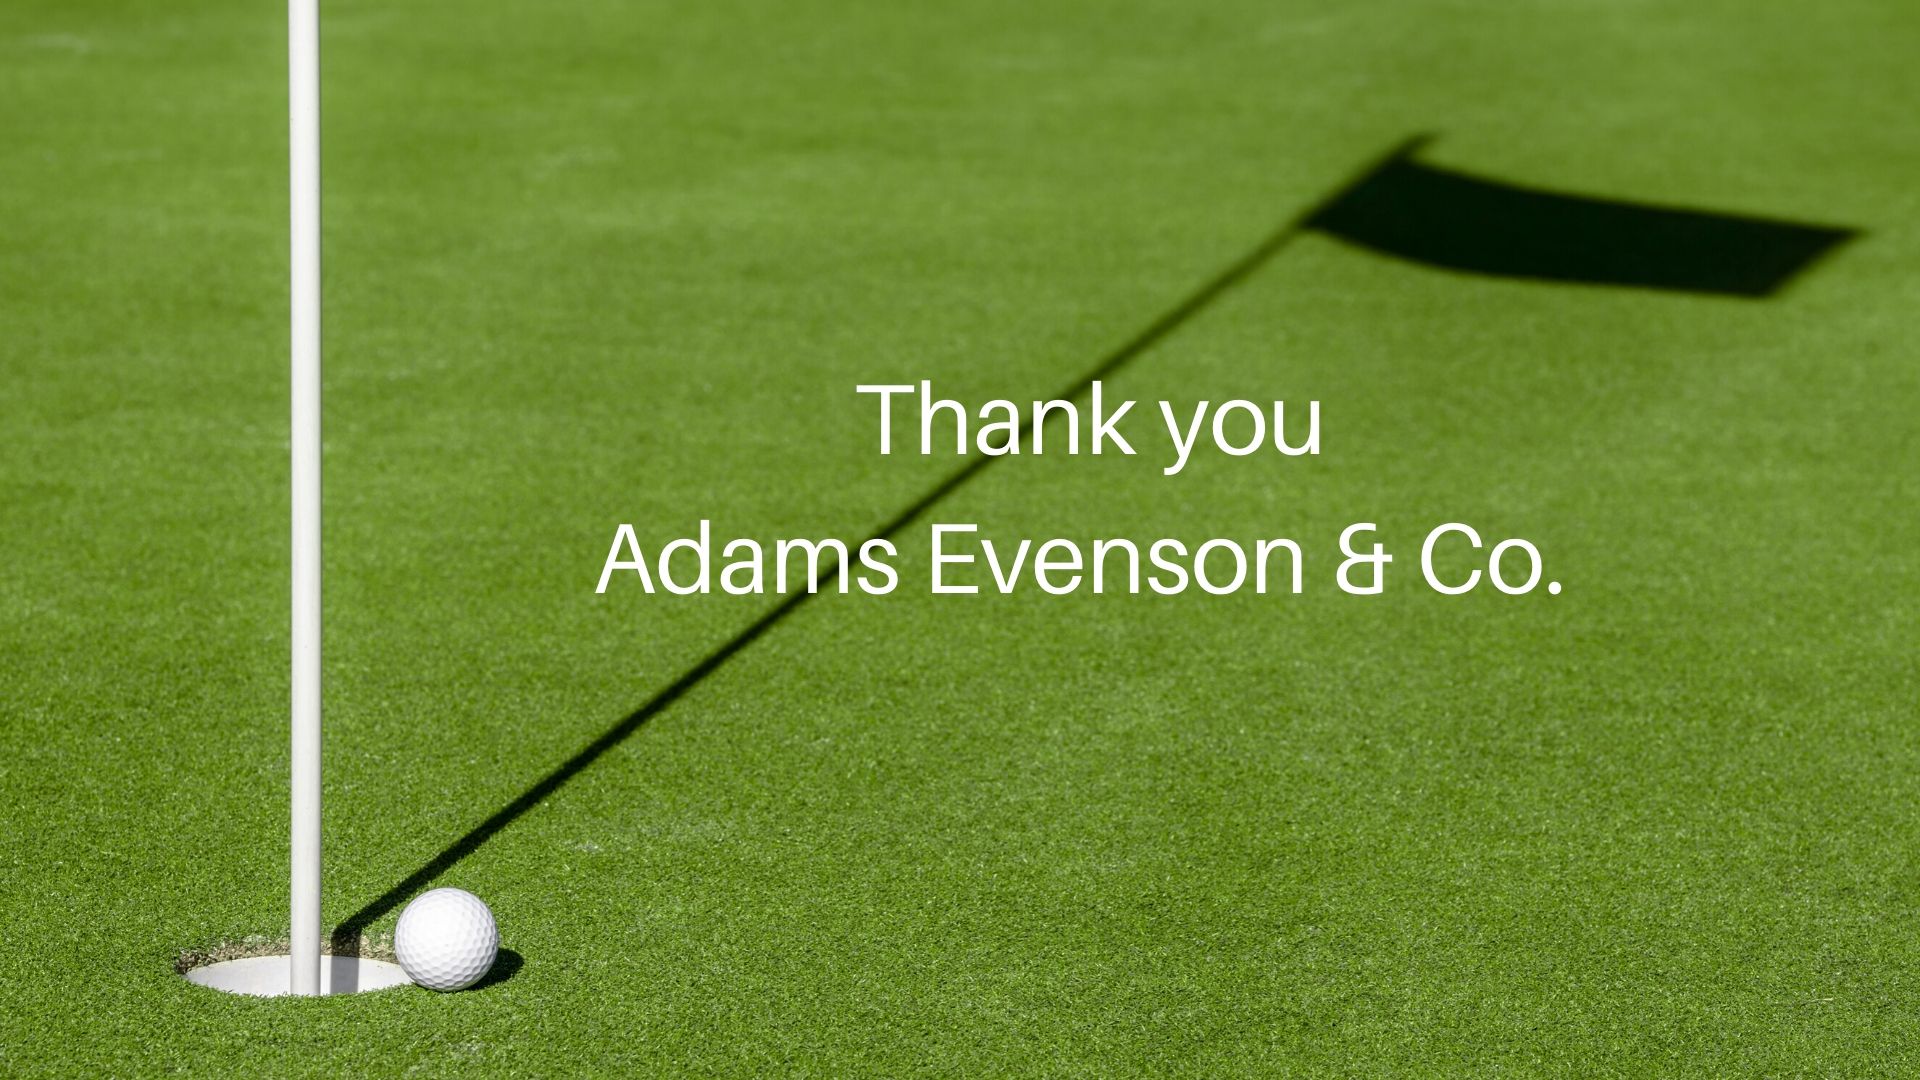 Adams Evenson & Co.